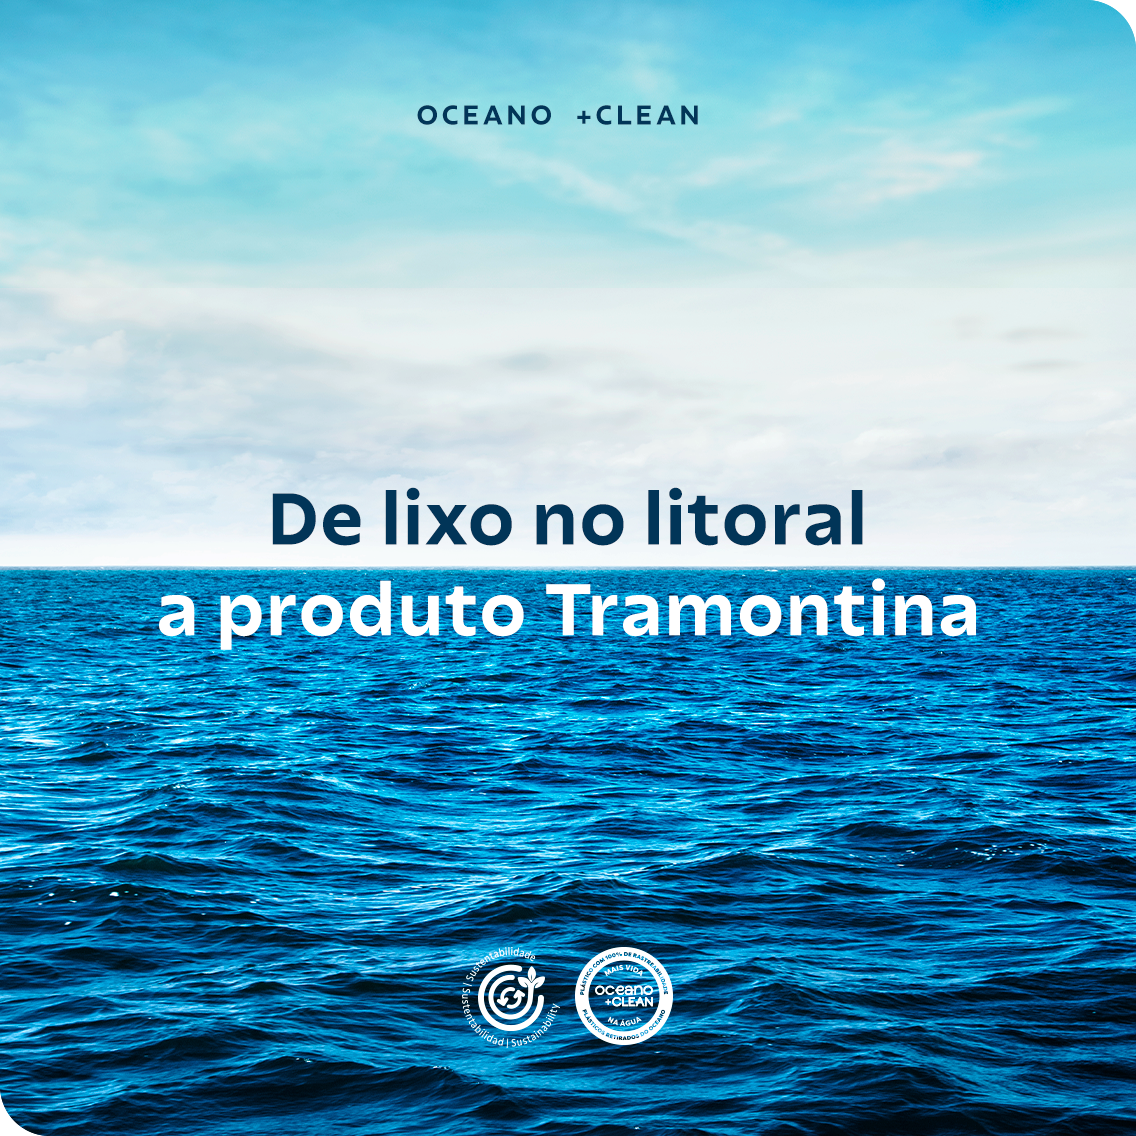 Oceano+Cleano, de lixo no litoral a produto Tramontina.